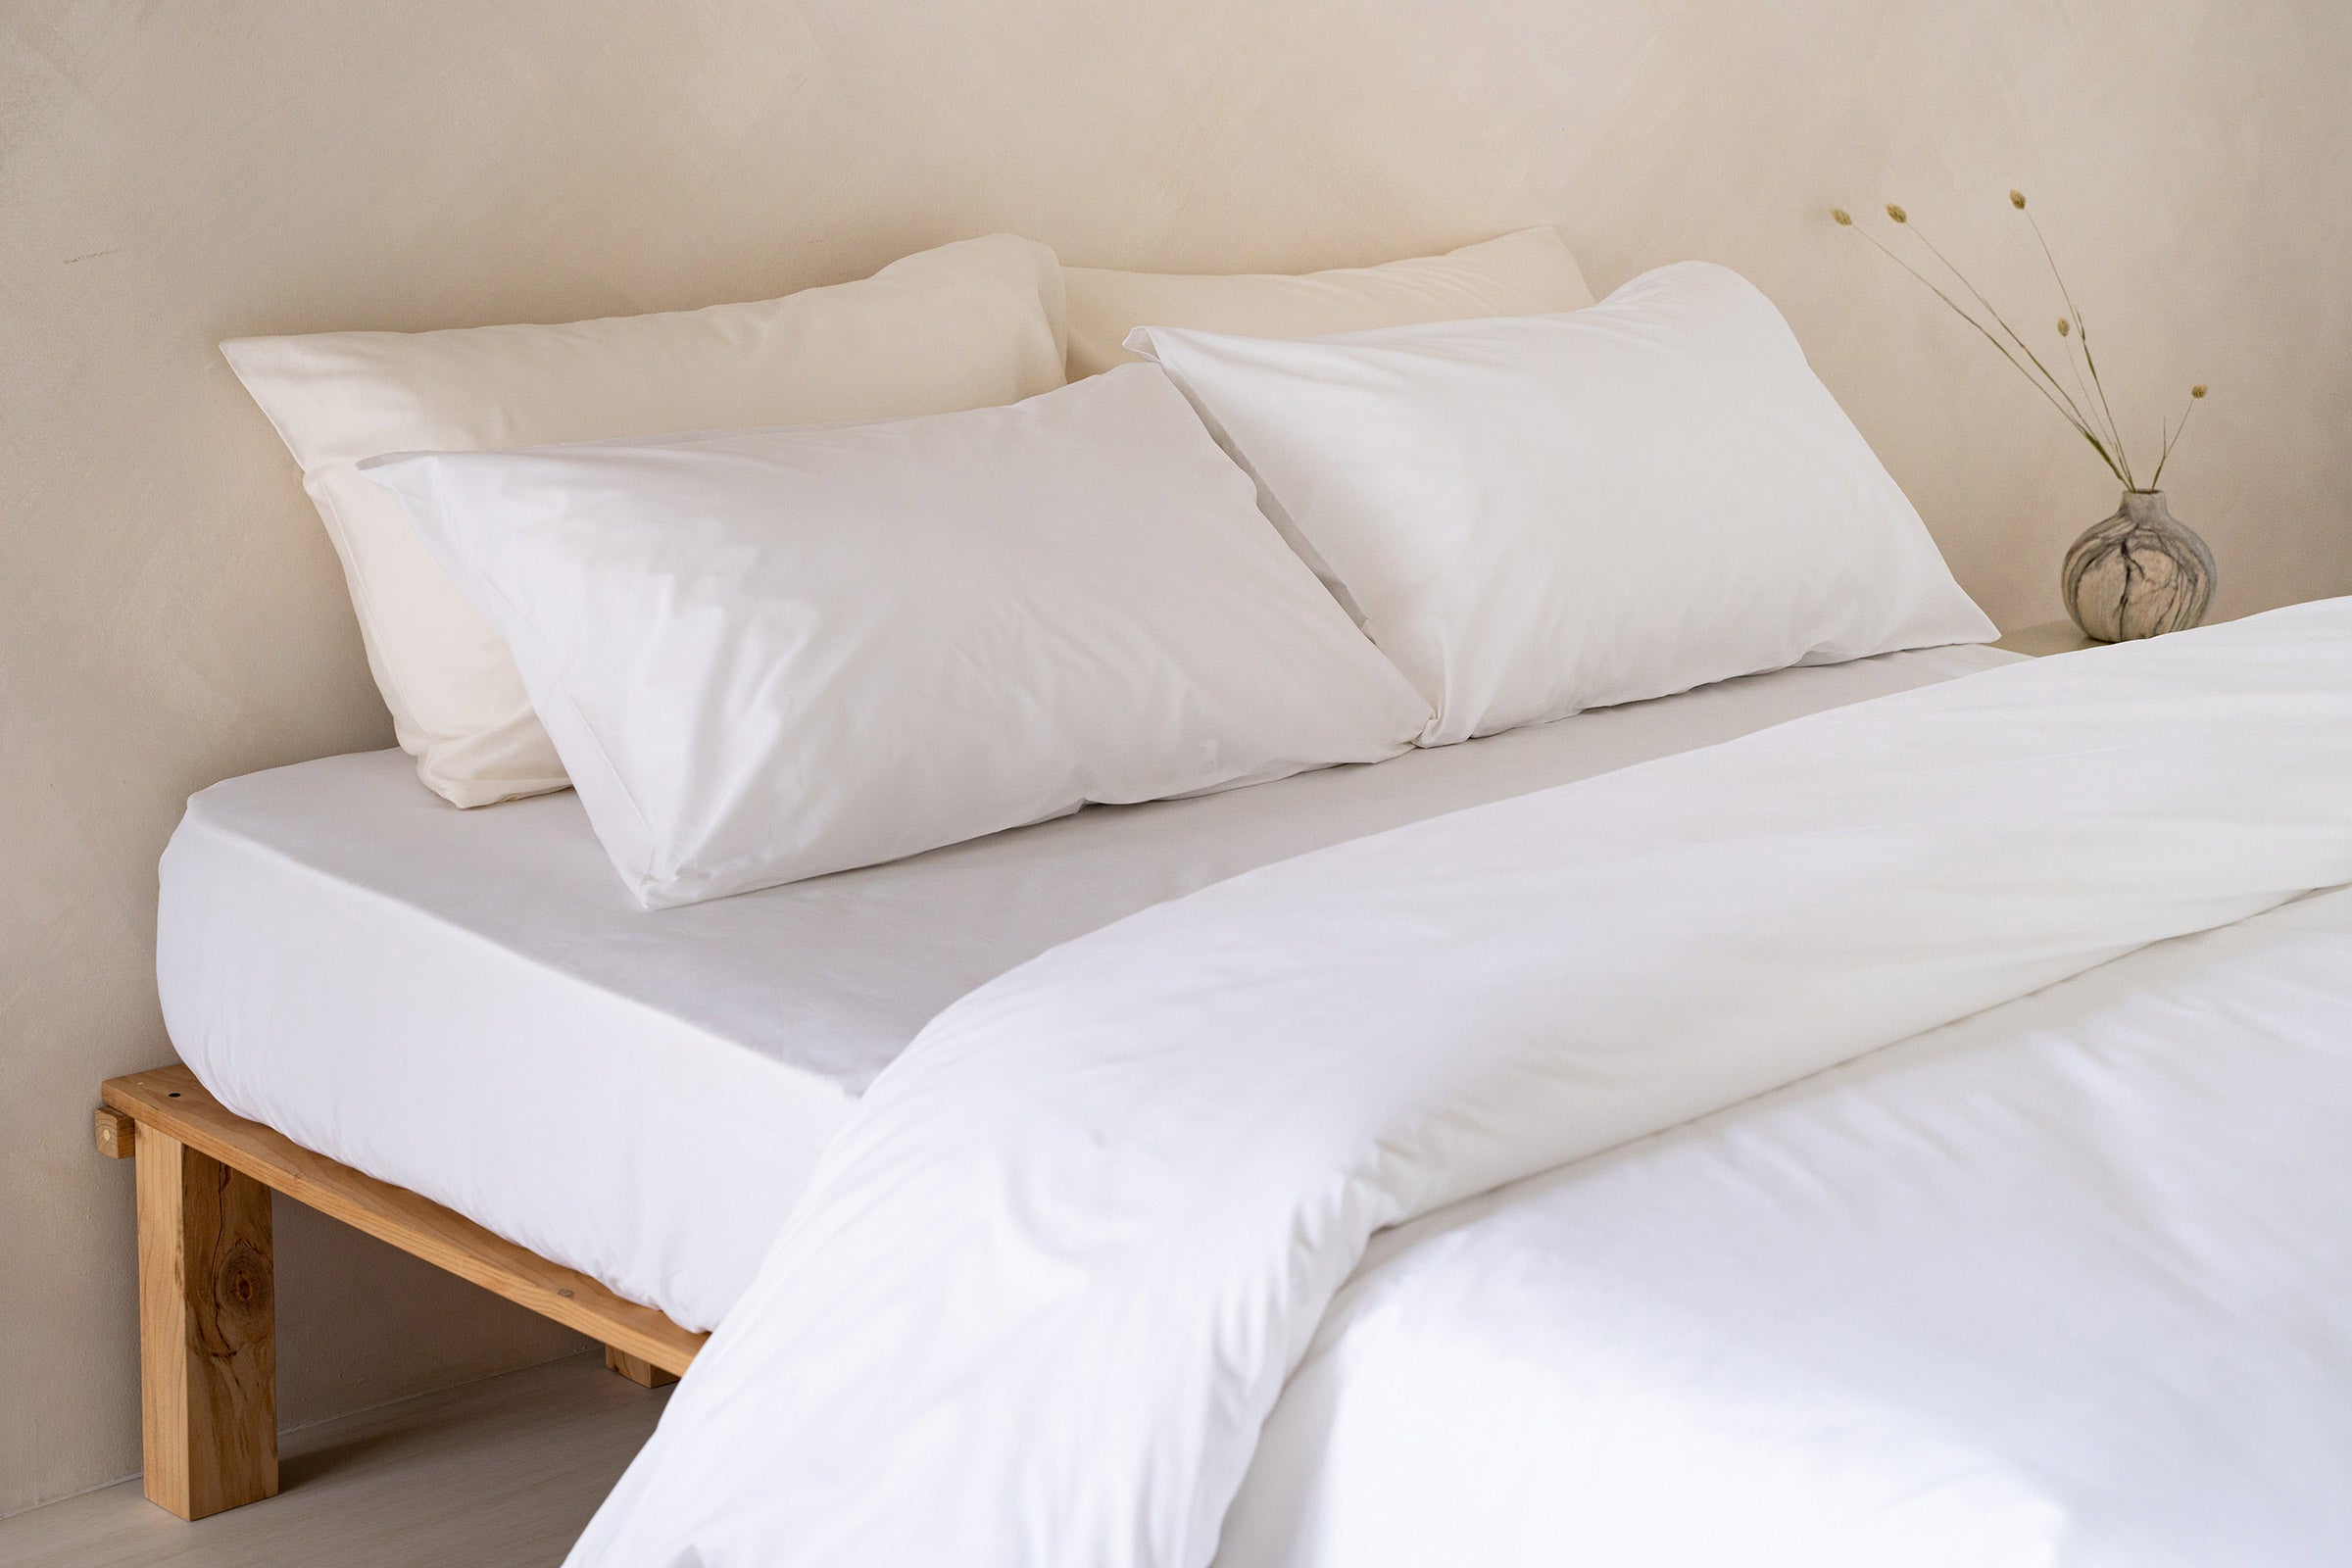 crisp-white-duvet-cover-fitted-sheet-pillowcase-pair-natural-pillowcase-pair-side-view-by-sojao.jpg